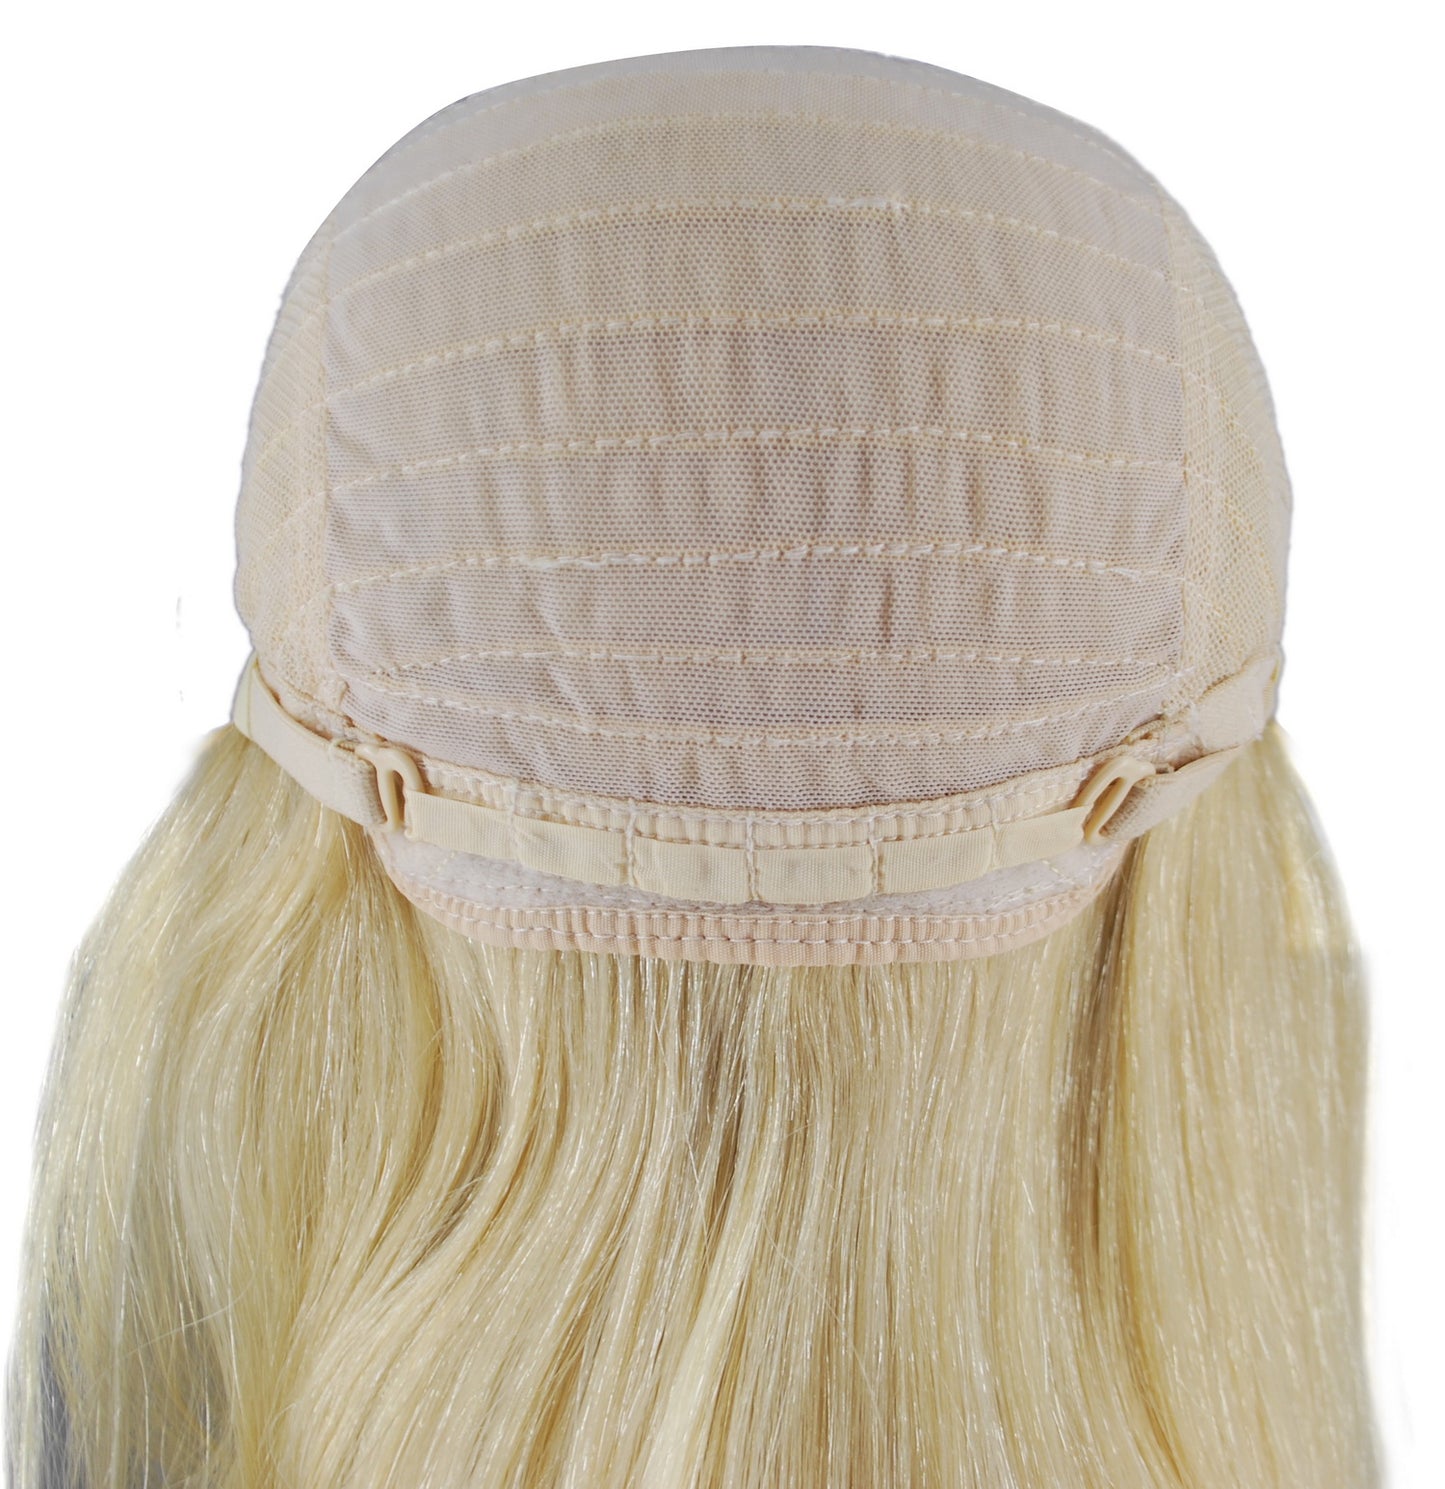 customize human hair wig for women silk top with machine cap glueless wig